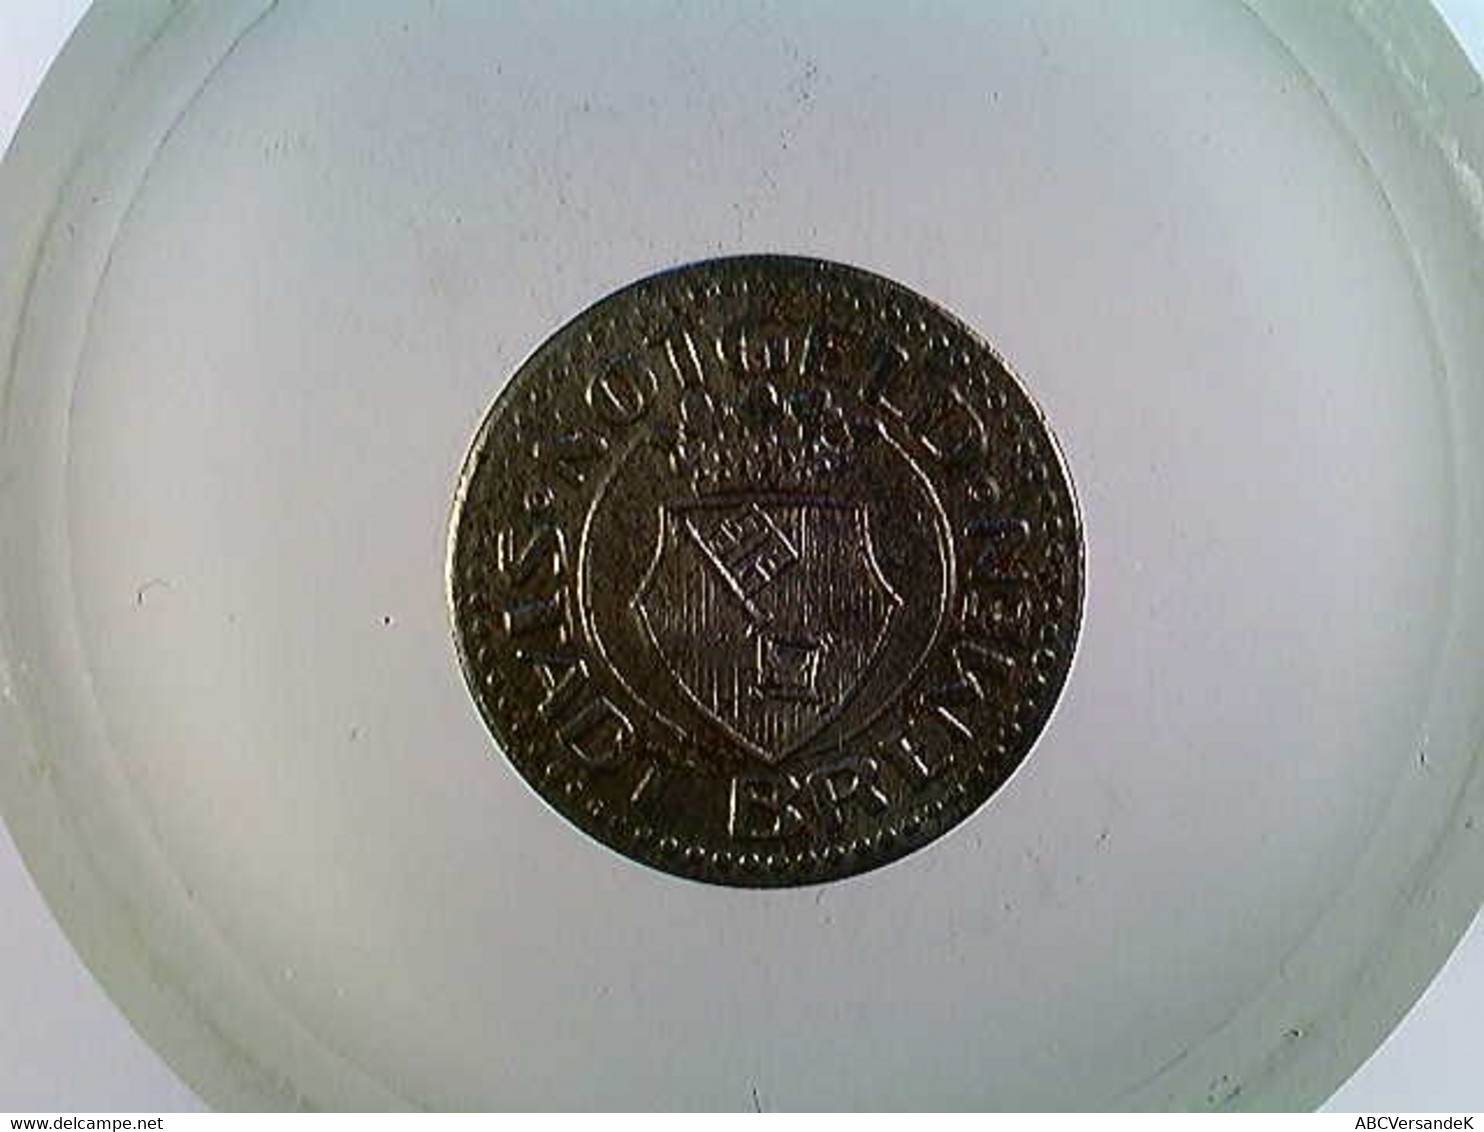 Münze Stadt Bremen, Notgeld 1920, 10 Pfennig - Numismatiek